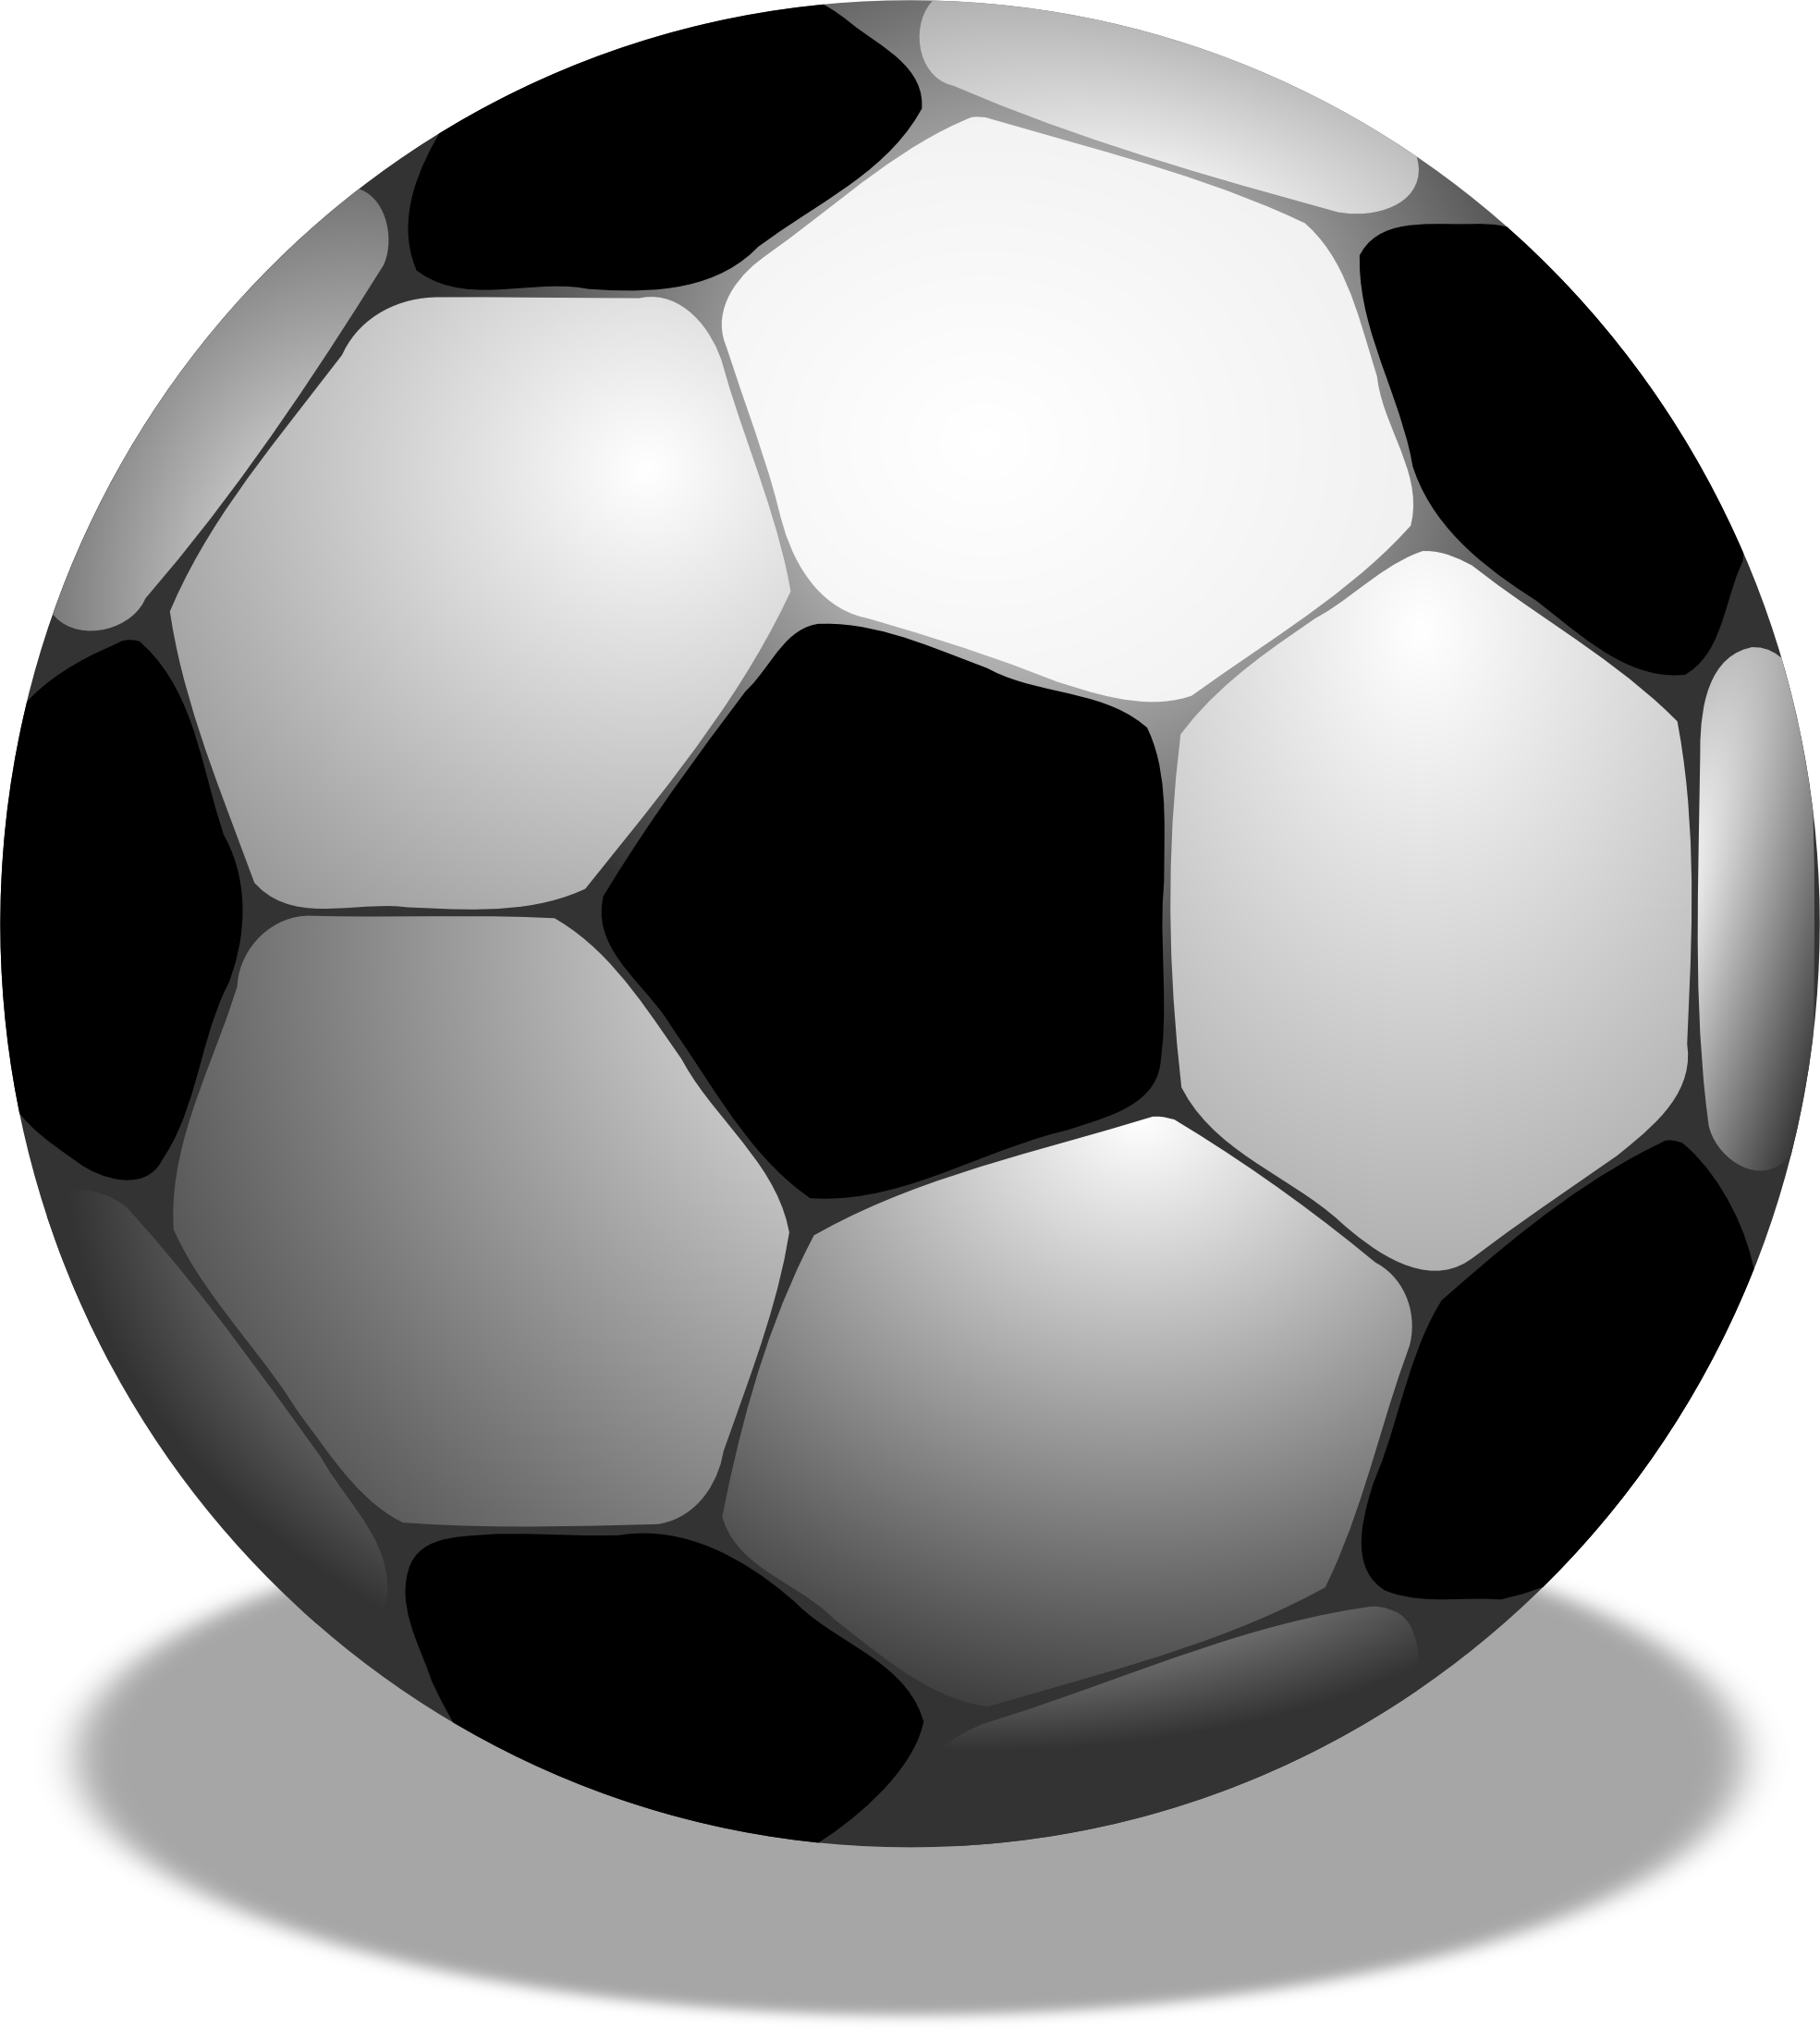 pelota-de-futbol-png-png-image-collection